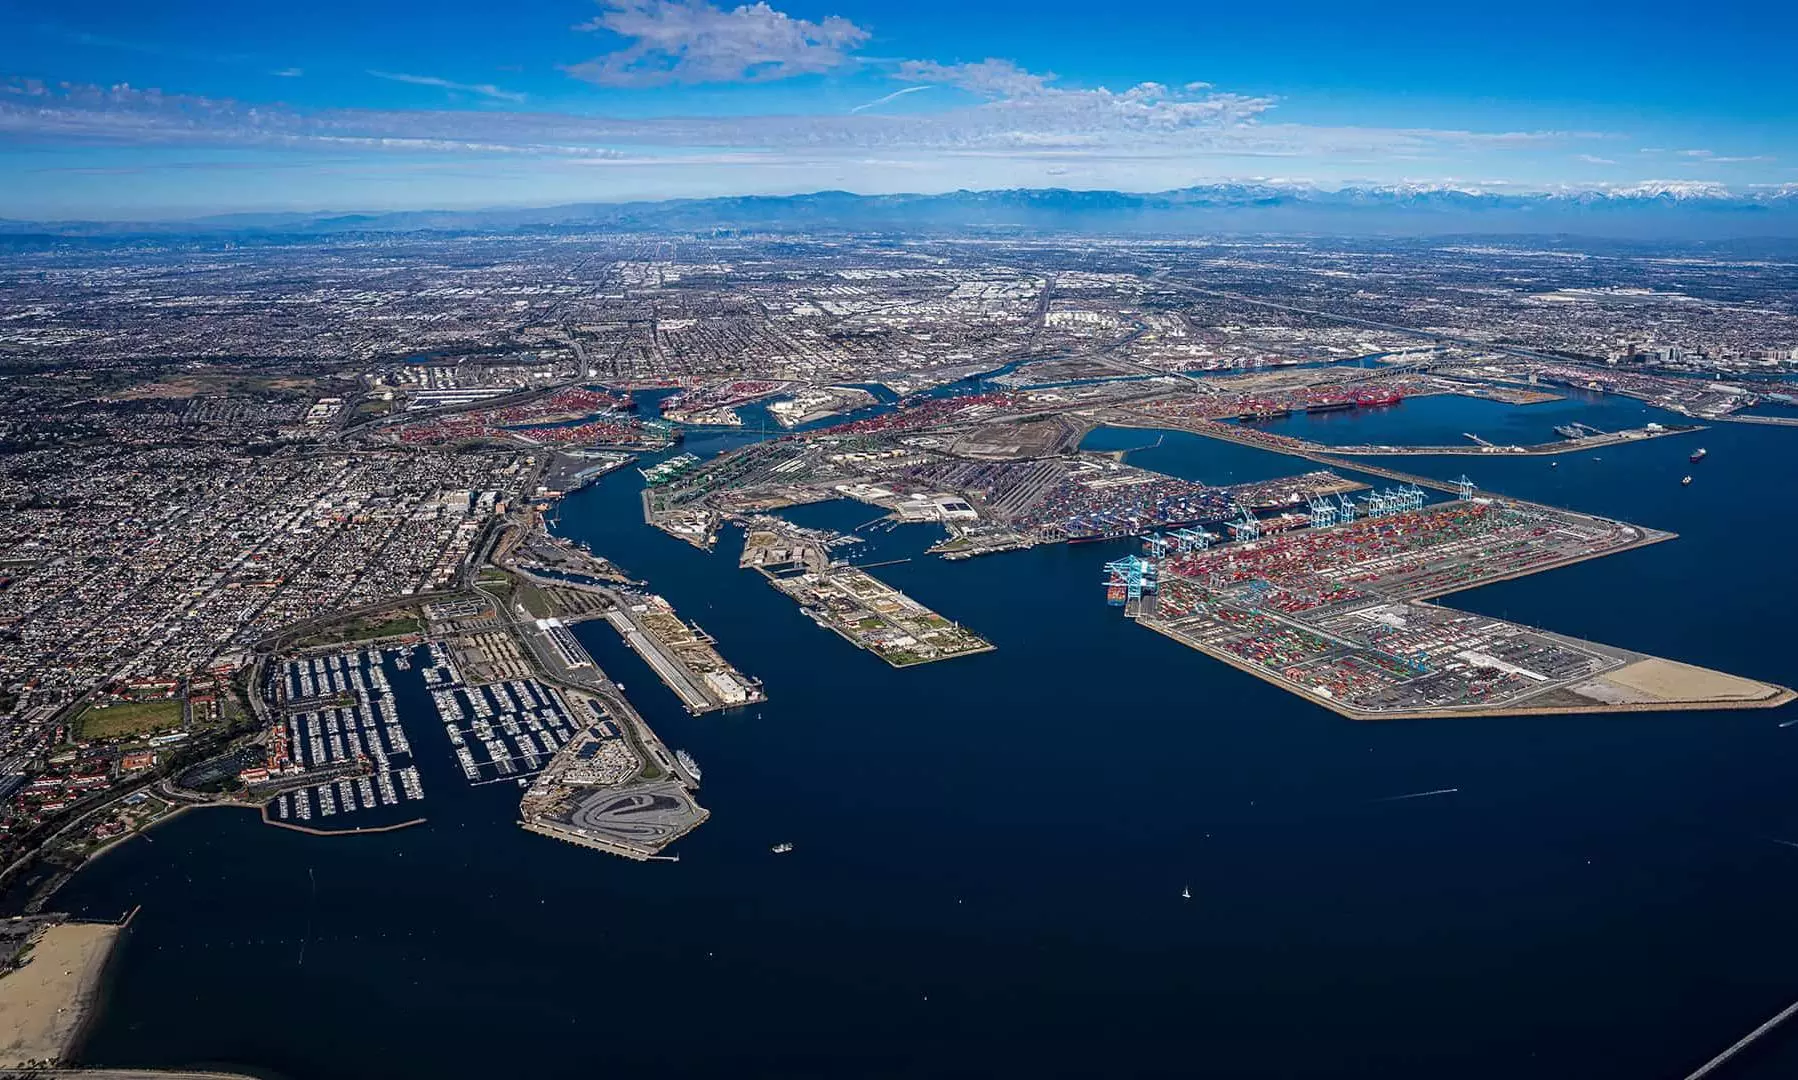 Singapore, Los Angeles, Long Beach Ports launch green/digital corridor